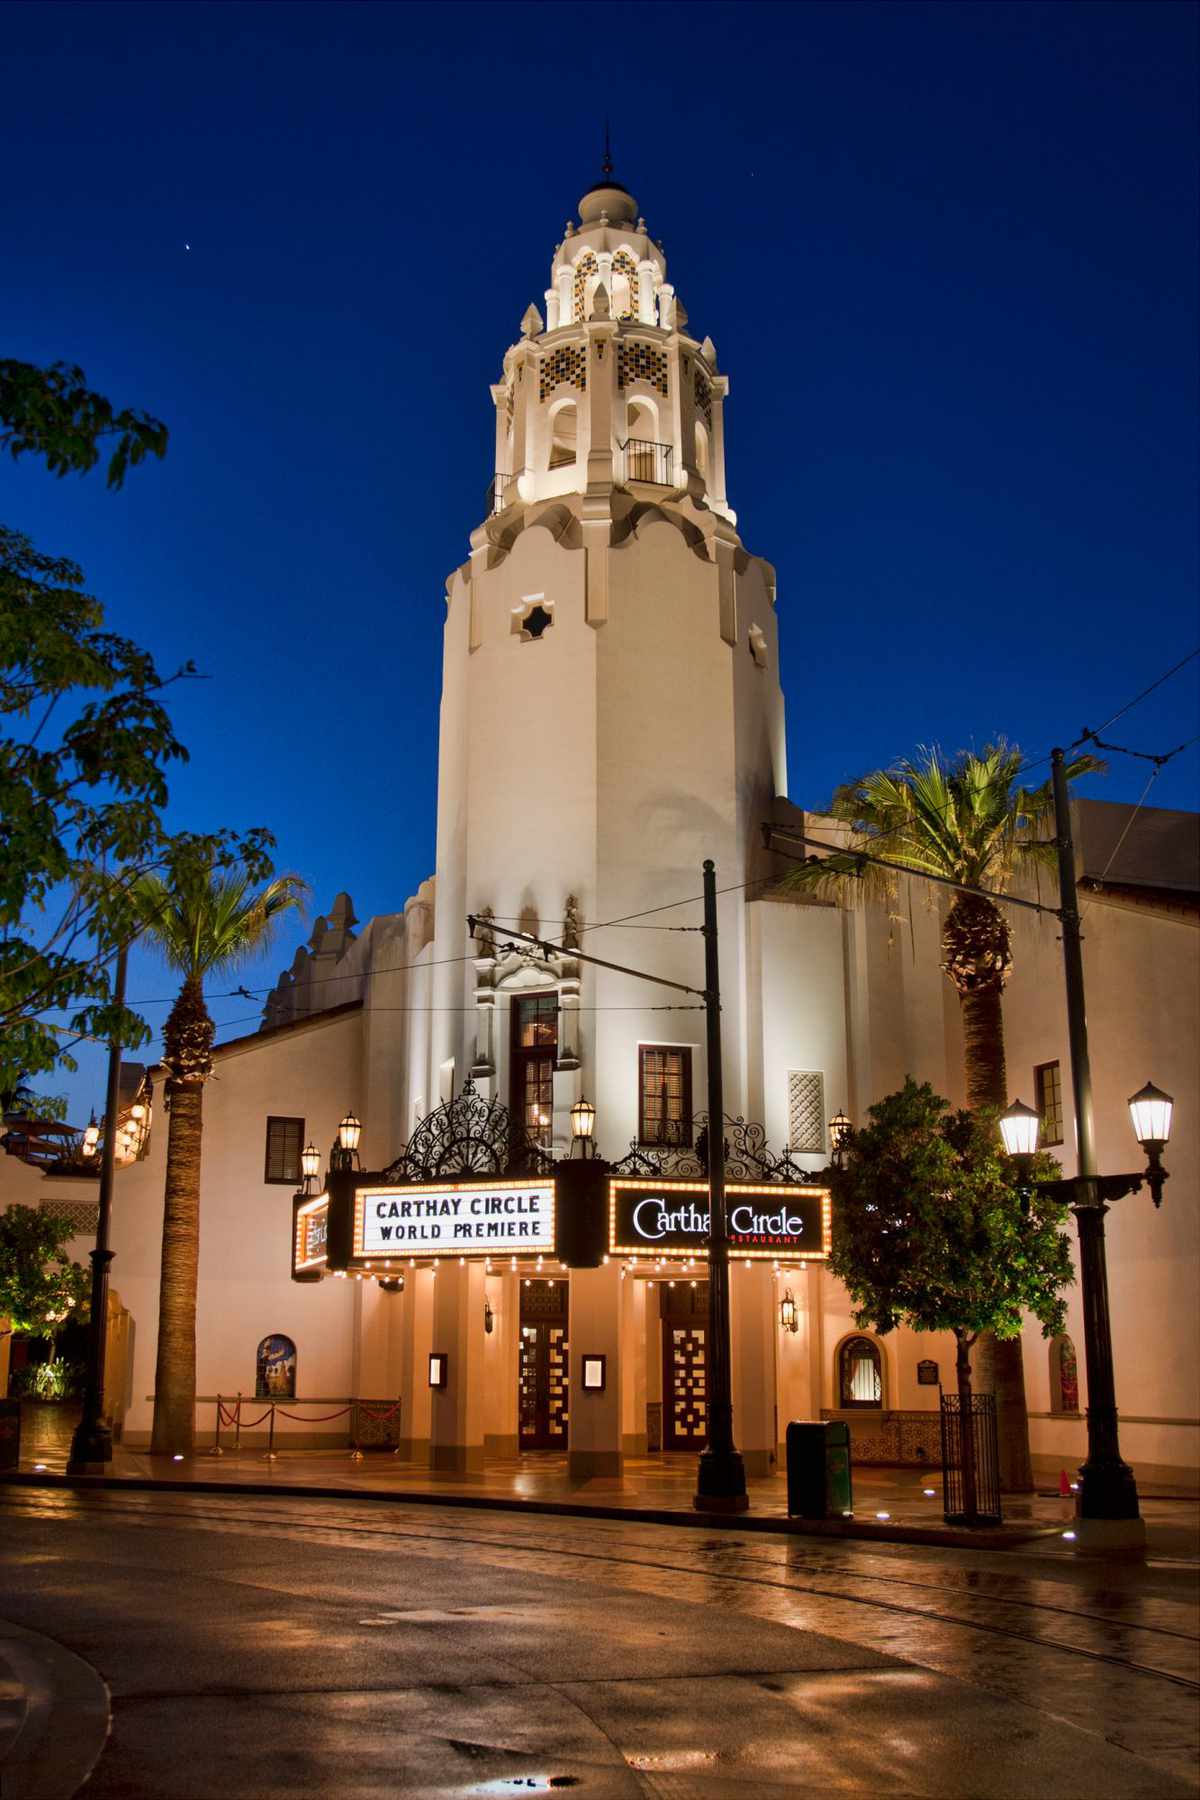 Carthay Circle Theatre is a spectacularlandmark at Disney California Adventure